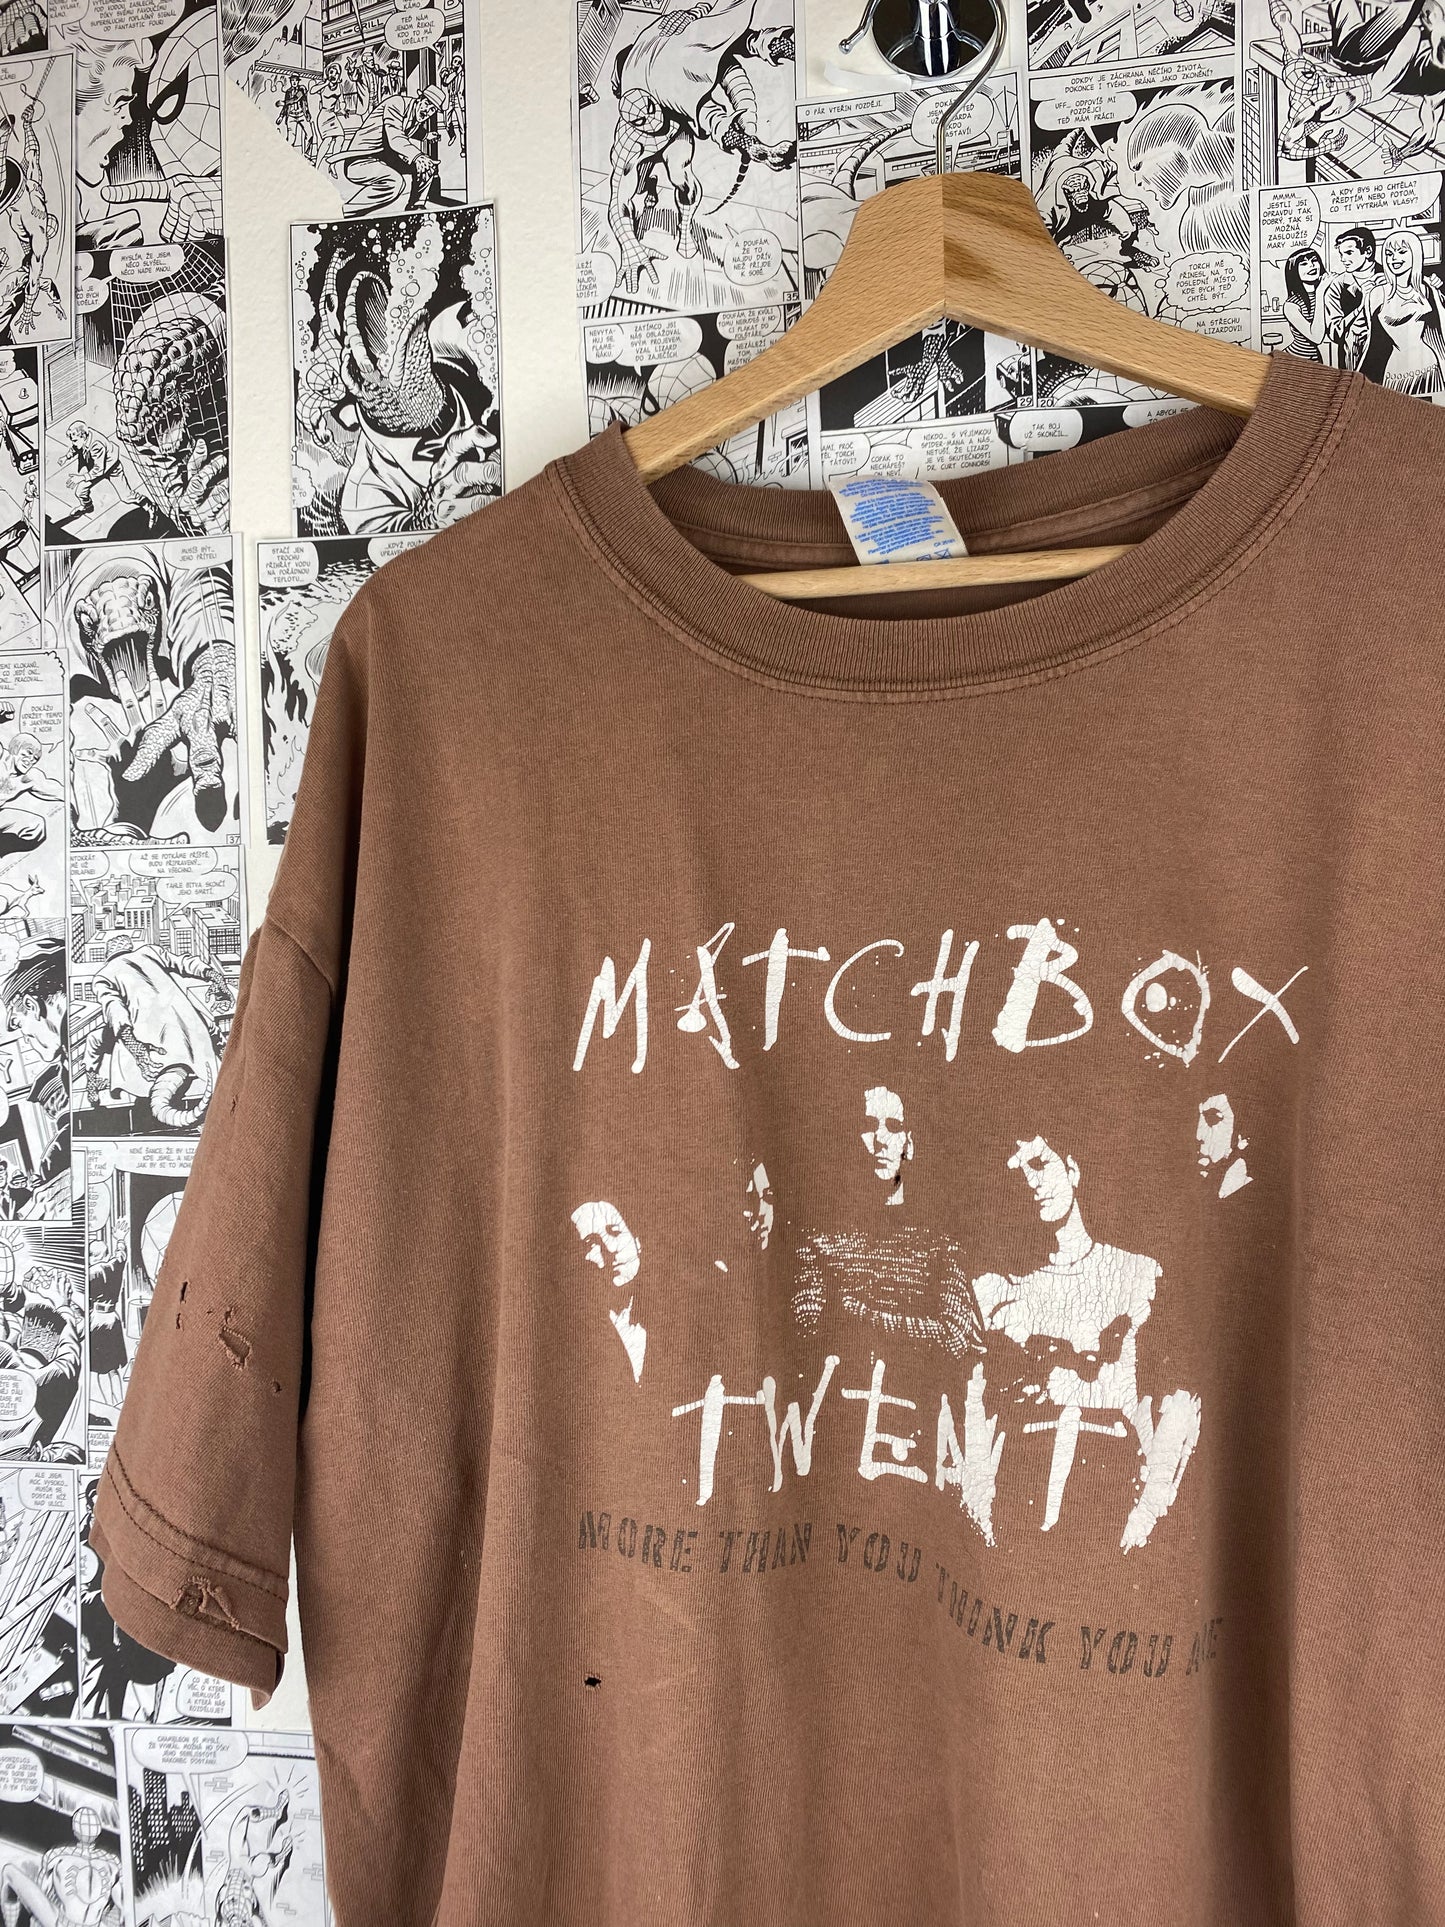 Vintage Matchbox 2003 - thrashed t-shirt - size XL